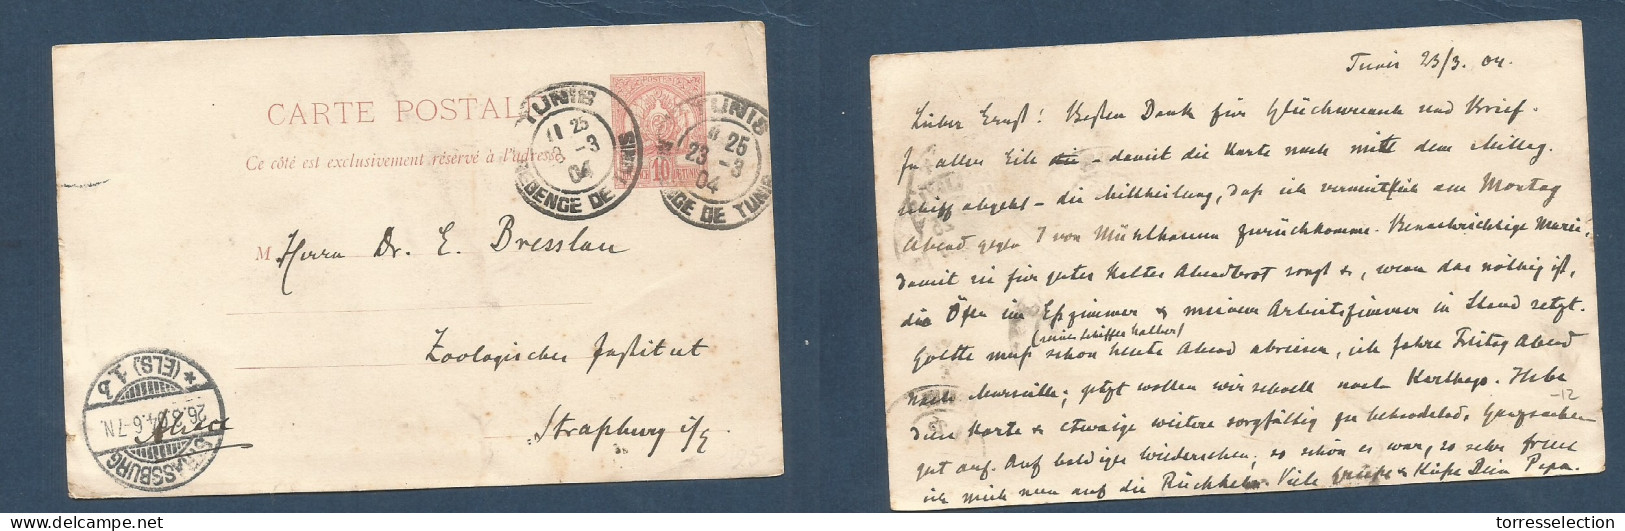 TUNISIA. 1904 (23 March) GPO - Strassburg, Germany (26 March) Cds Error Date TUNIS Again 28.3.04. Fine 10c Red Stat Card - Tunisia